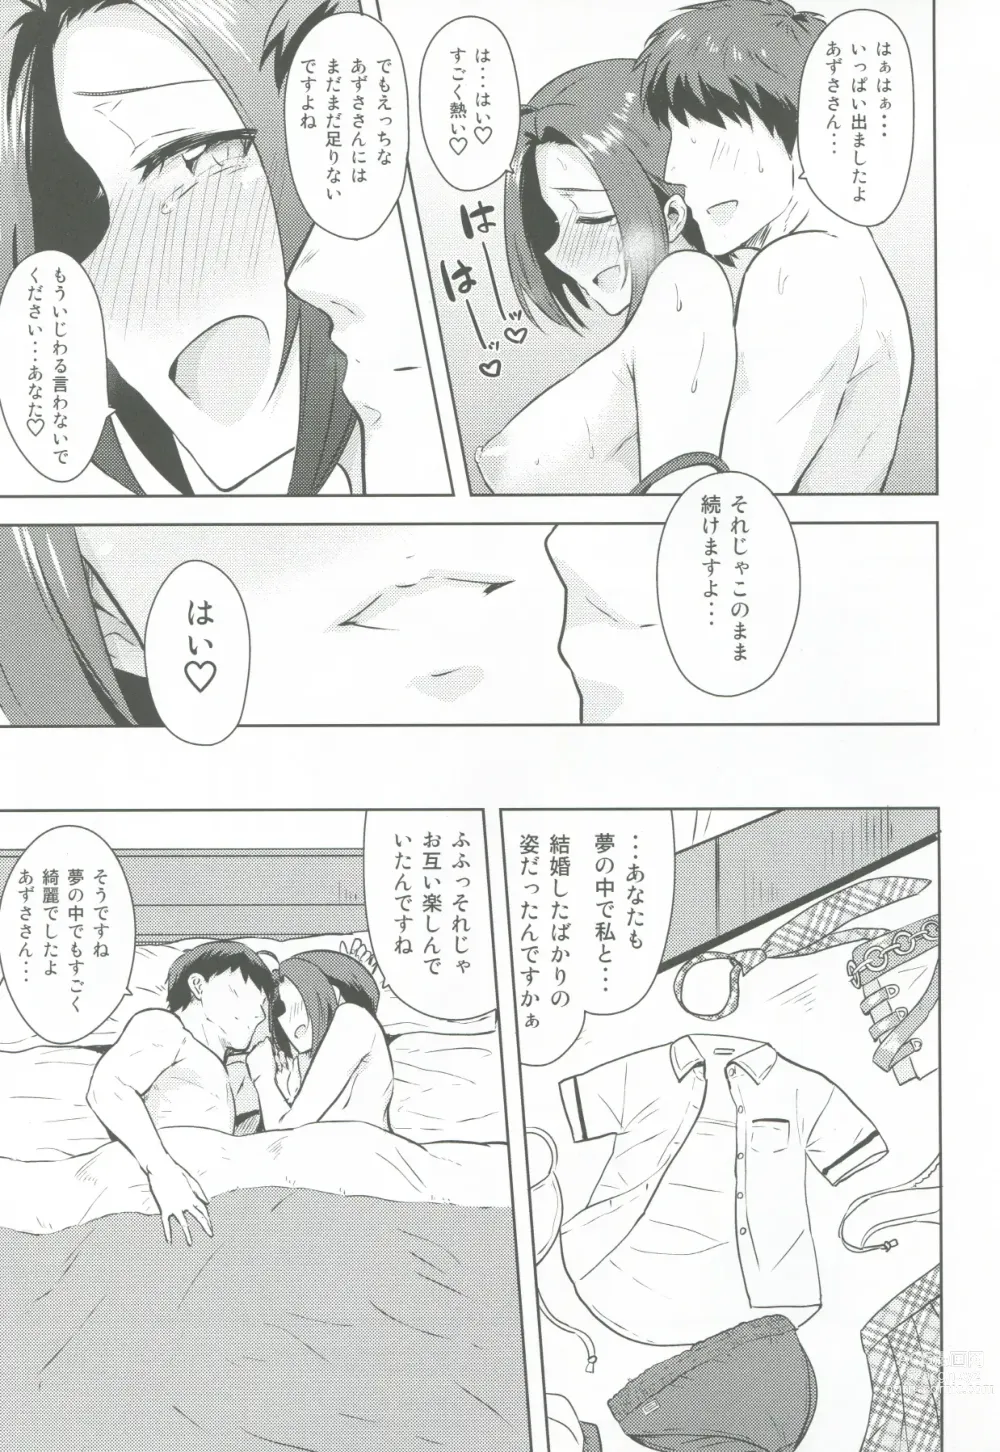 Page 48 of doujinshi AZ memories 2